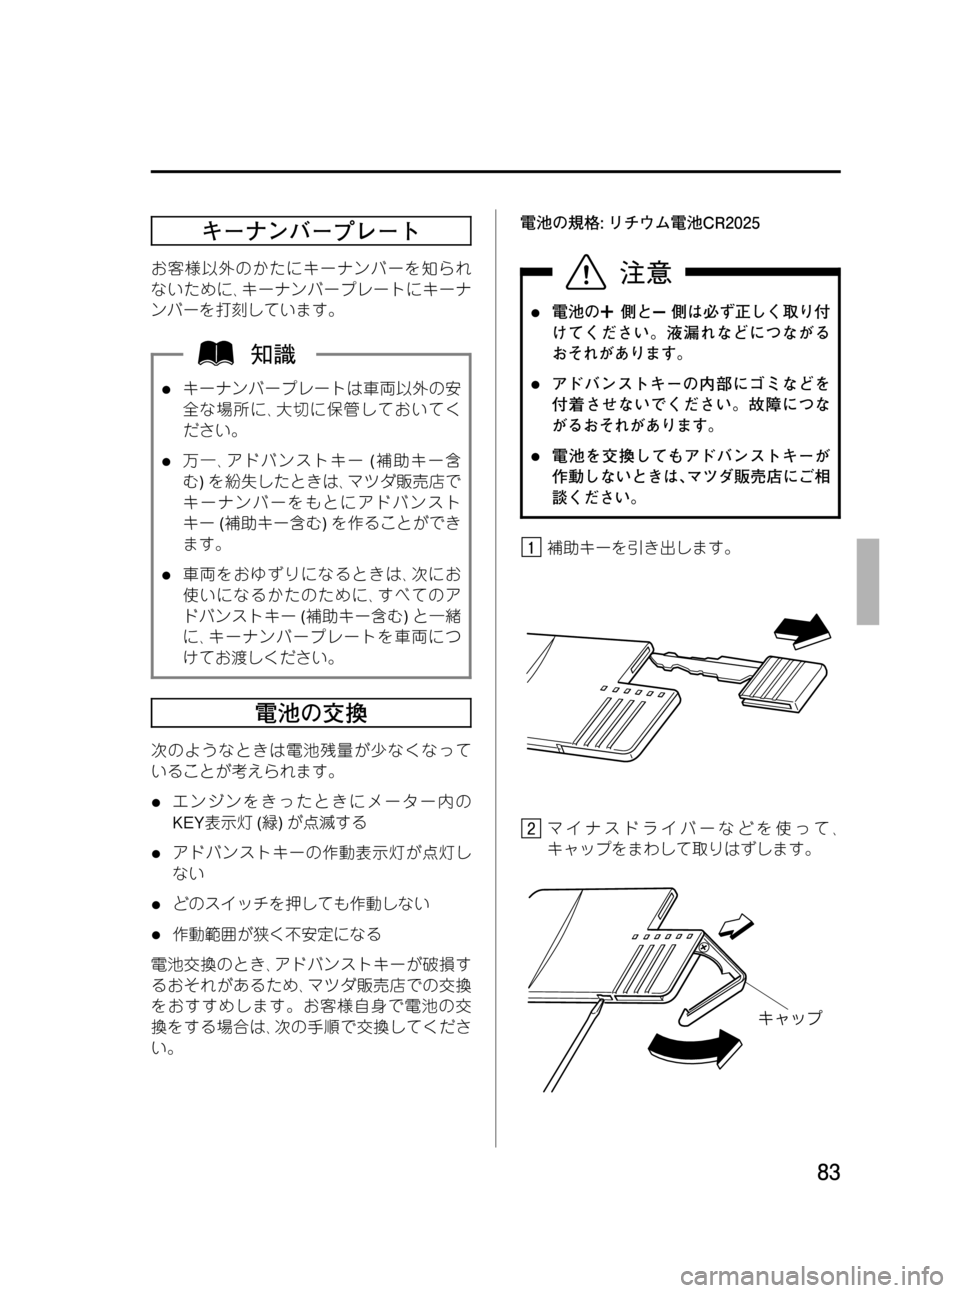 Mazda Model Rx 8 08 取扱説明書 In Japanese 296 Pages